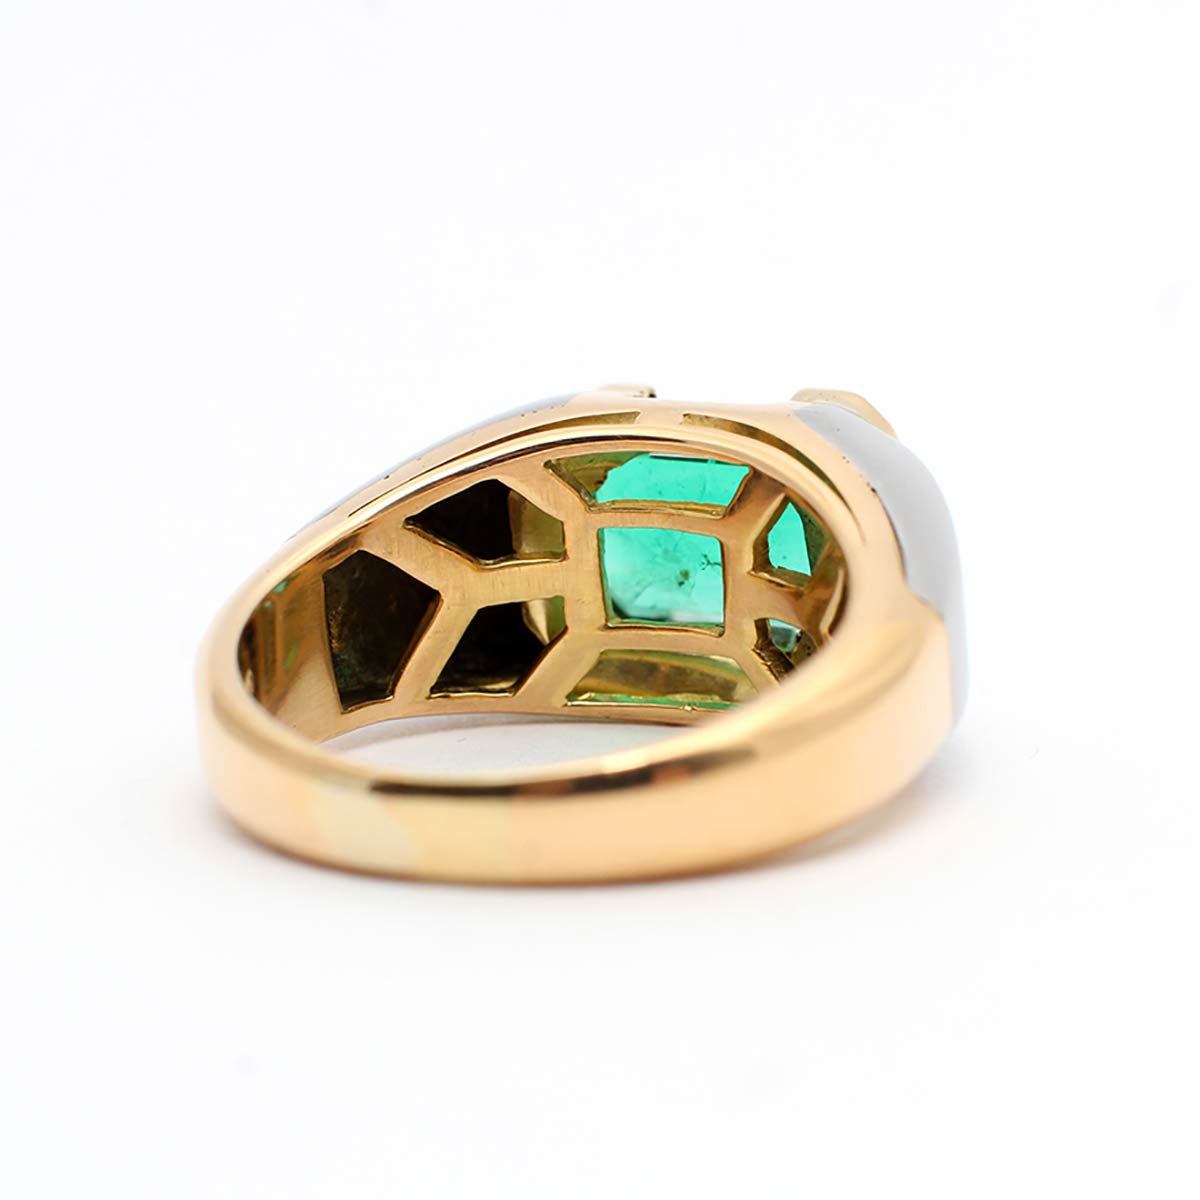 EMERALD DIAMOND GOLD RING - SIGNED ... - Bertolami Fine Art